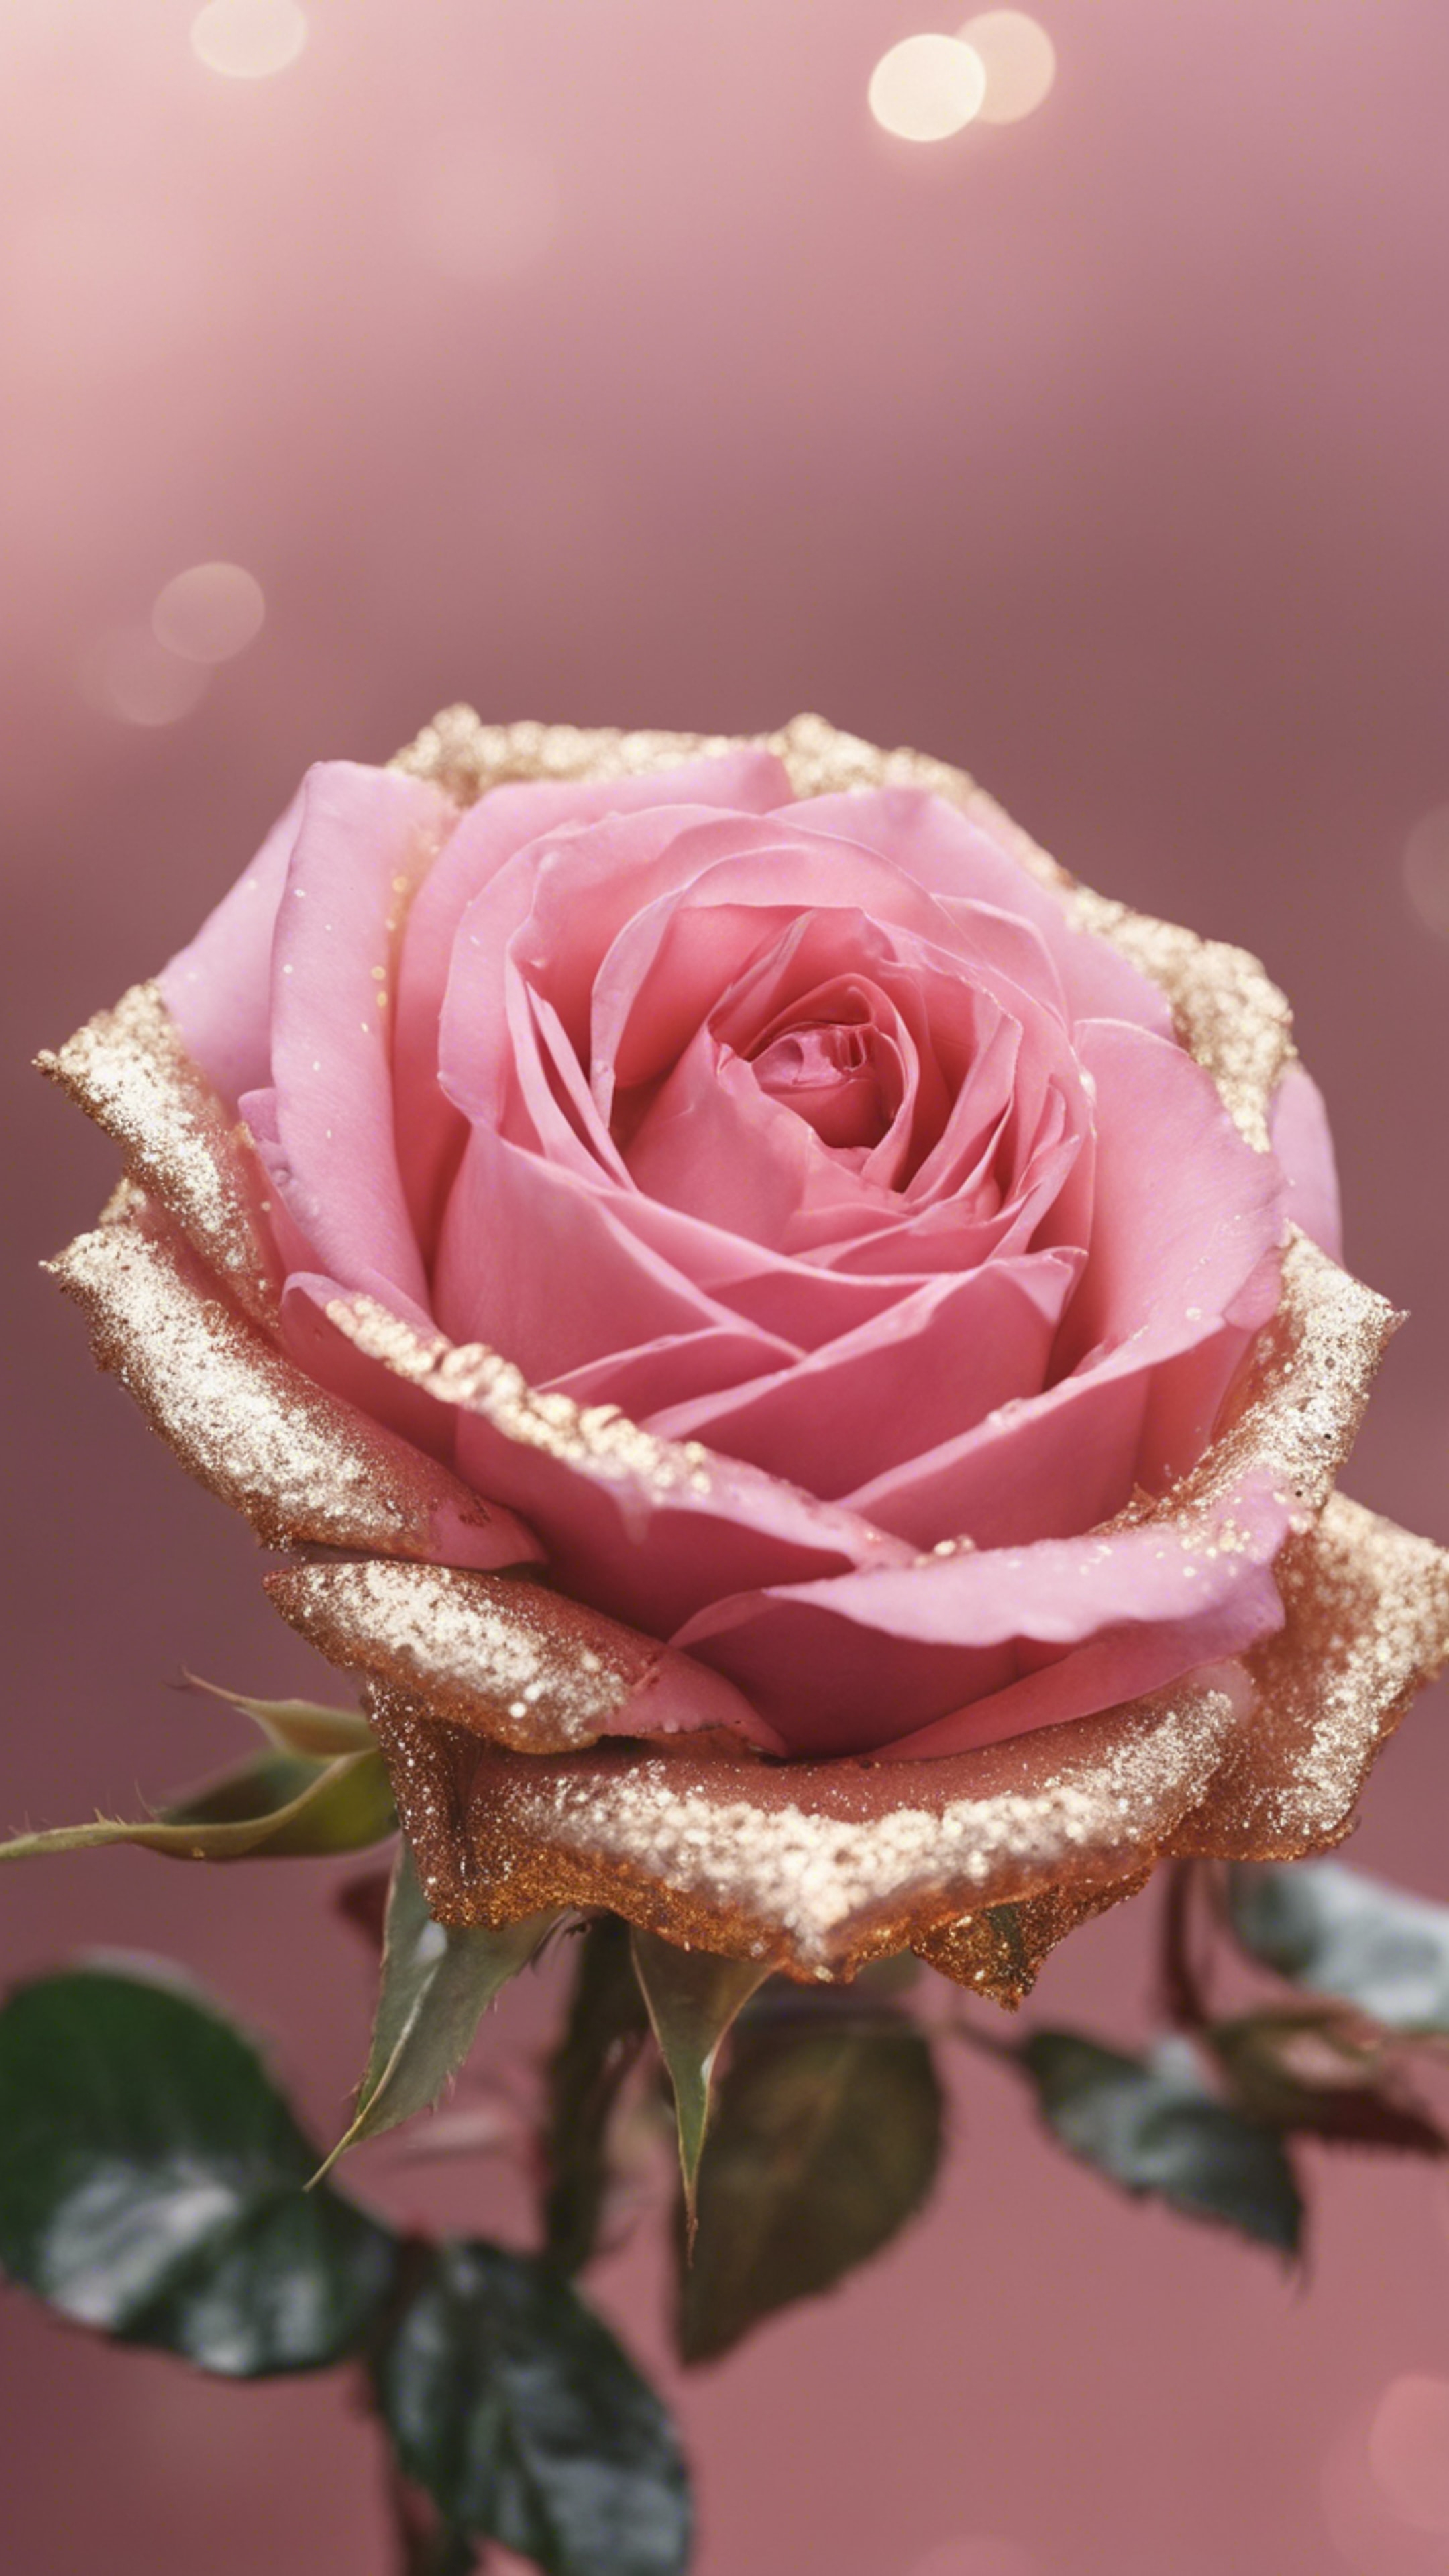 A closeup view of a beautiful pink rose with gold glittered edges. Tapeta[3875274ebd404c0da9bb]